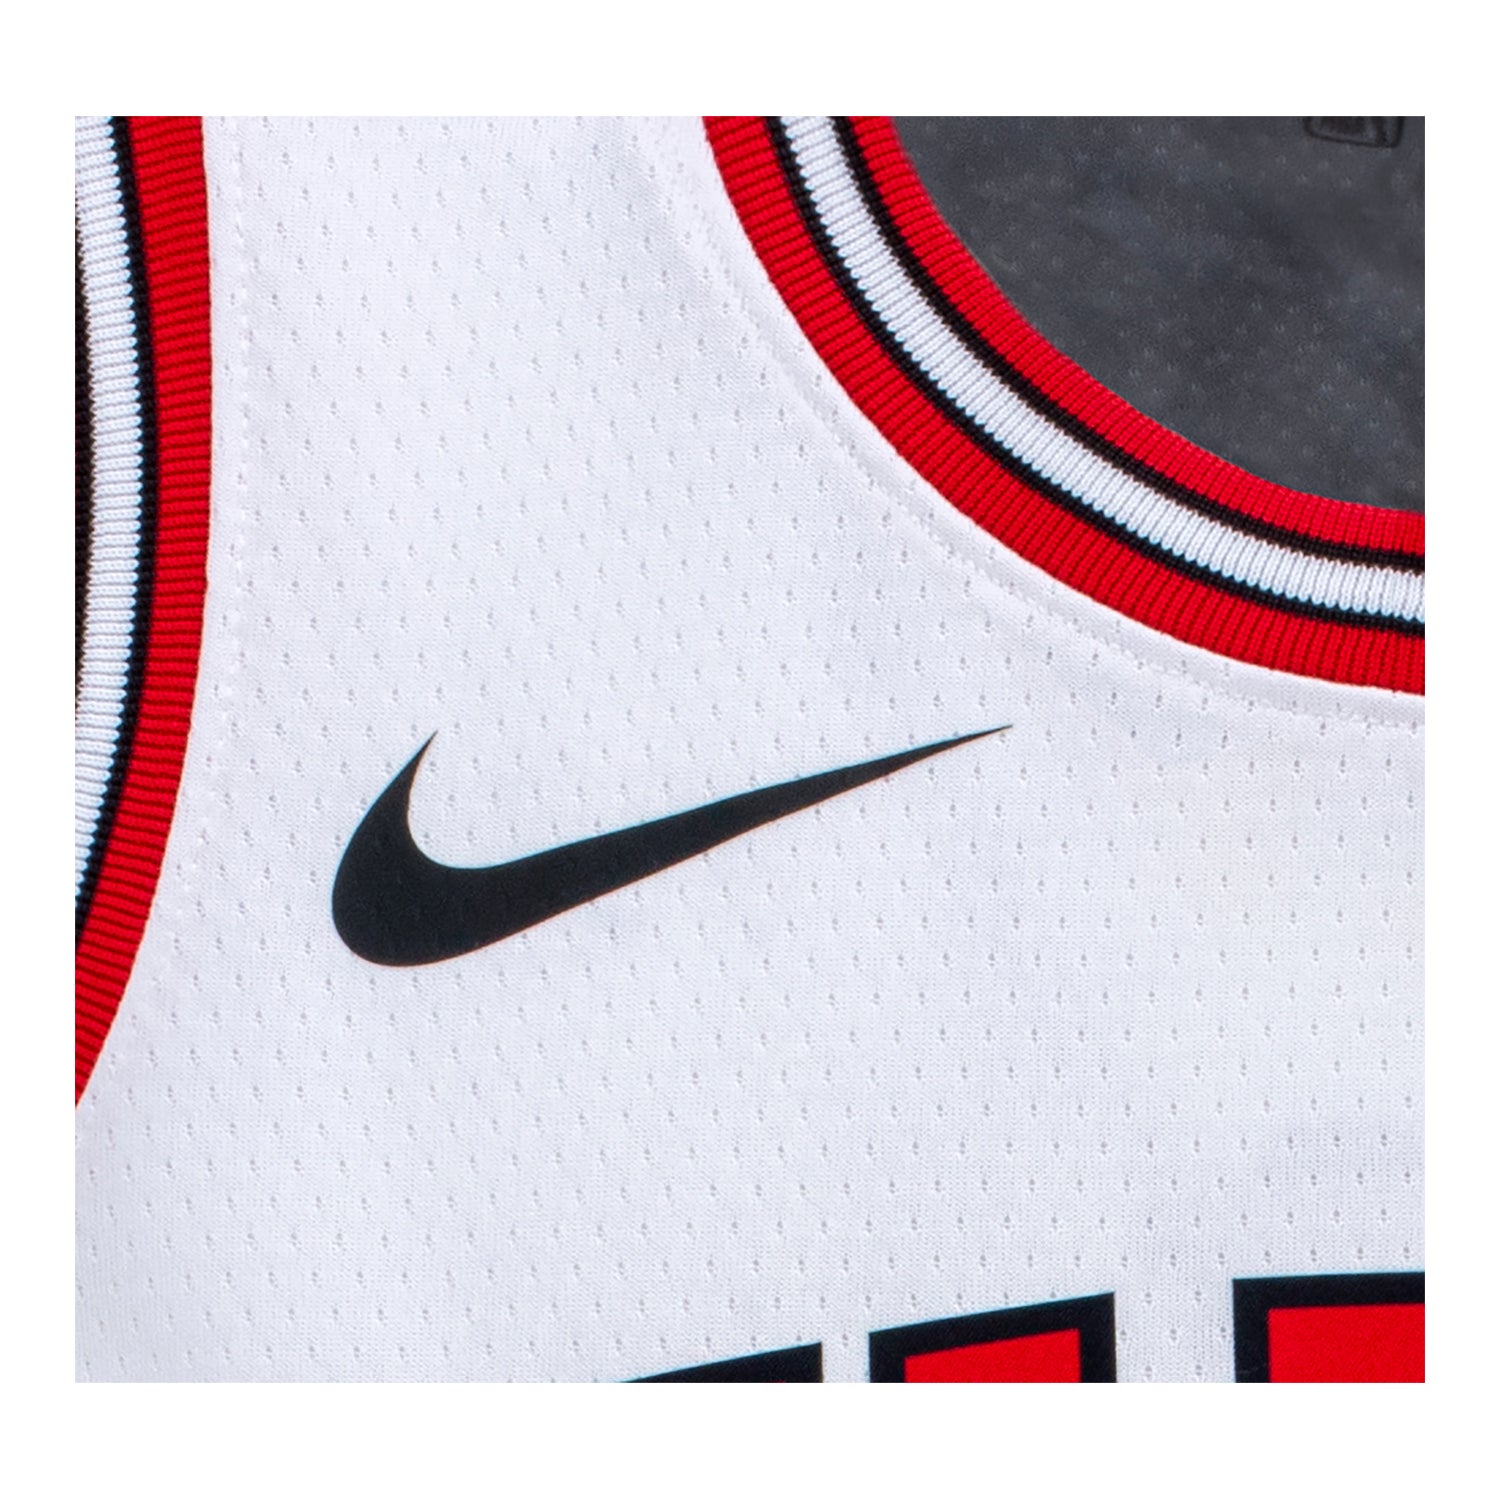 Chicago Bulls Nike Association Swingman Jersey - close up view